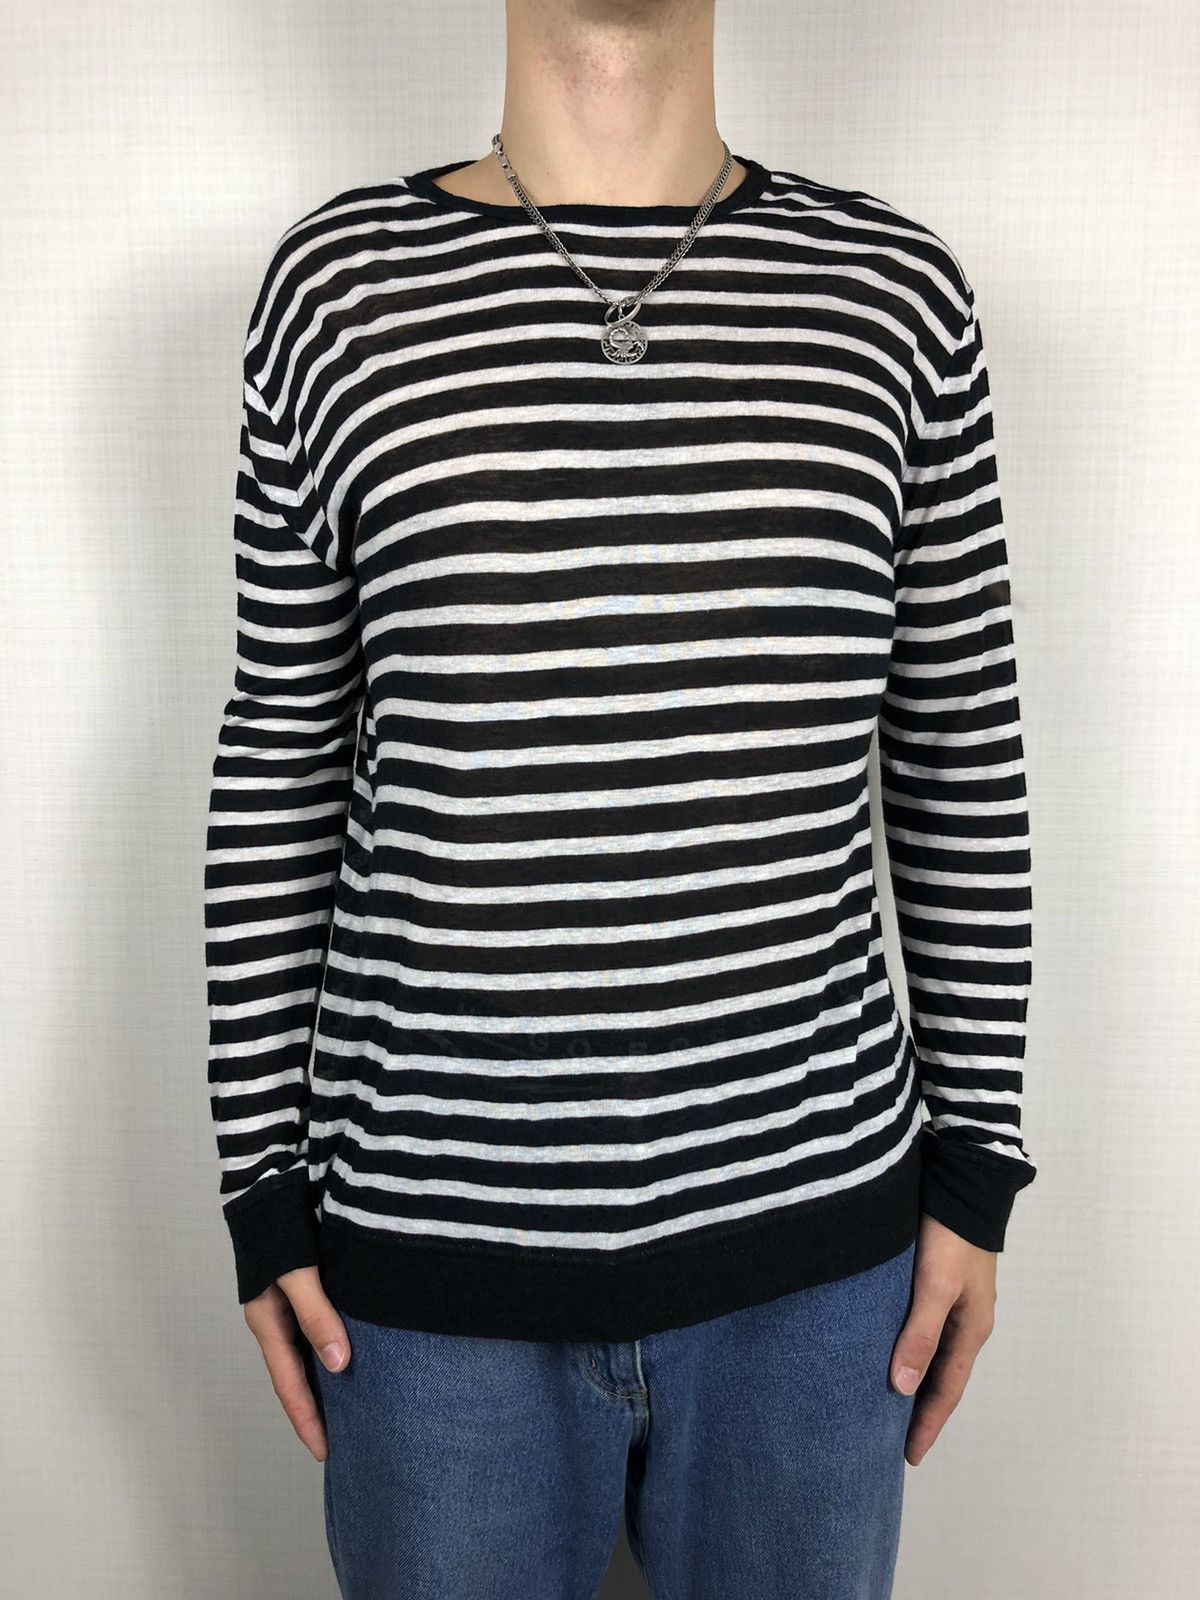 Rare T Alexander Wang Striped Sweater Long Sleeve ThIn Black Logo Size US M / EU 48-50 / 2 - 1 Preview